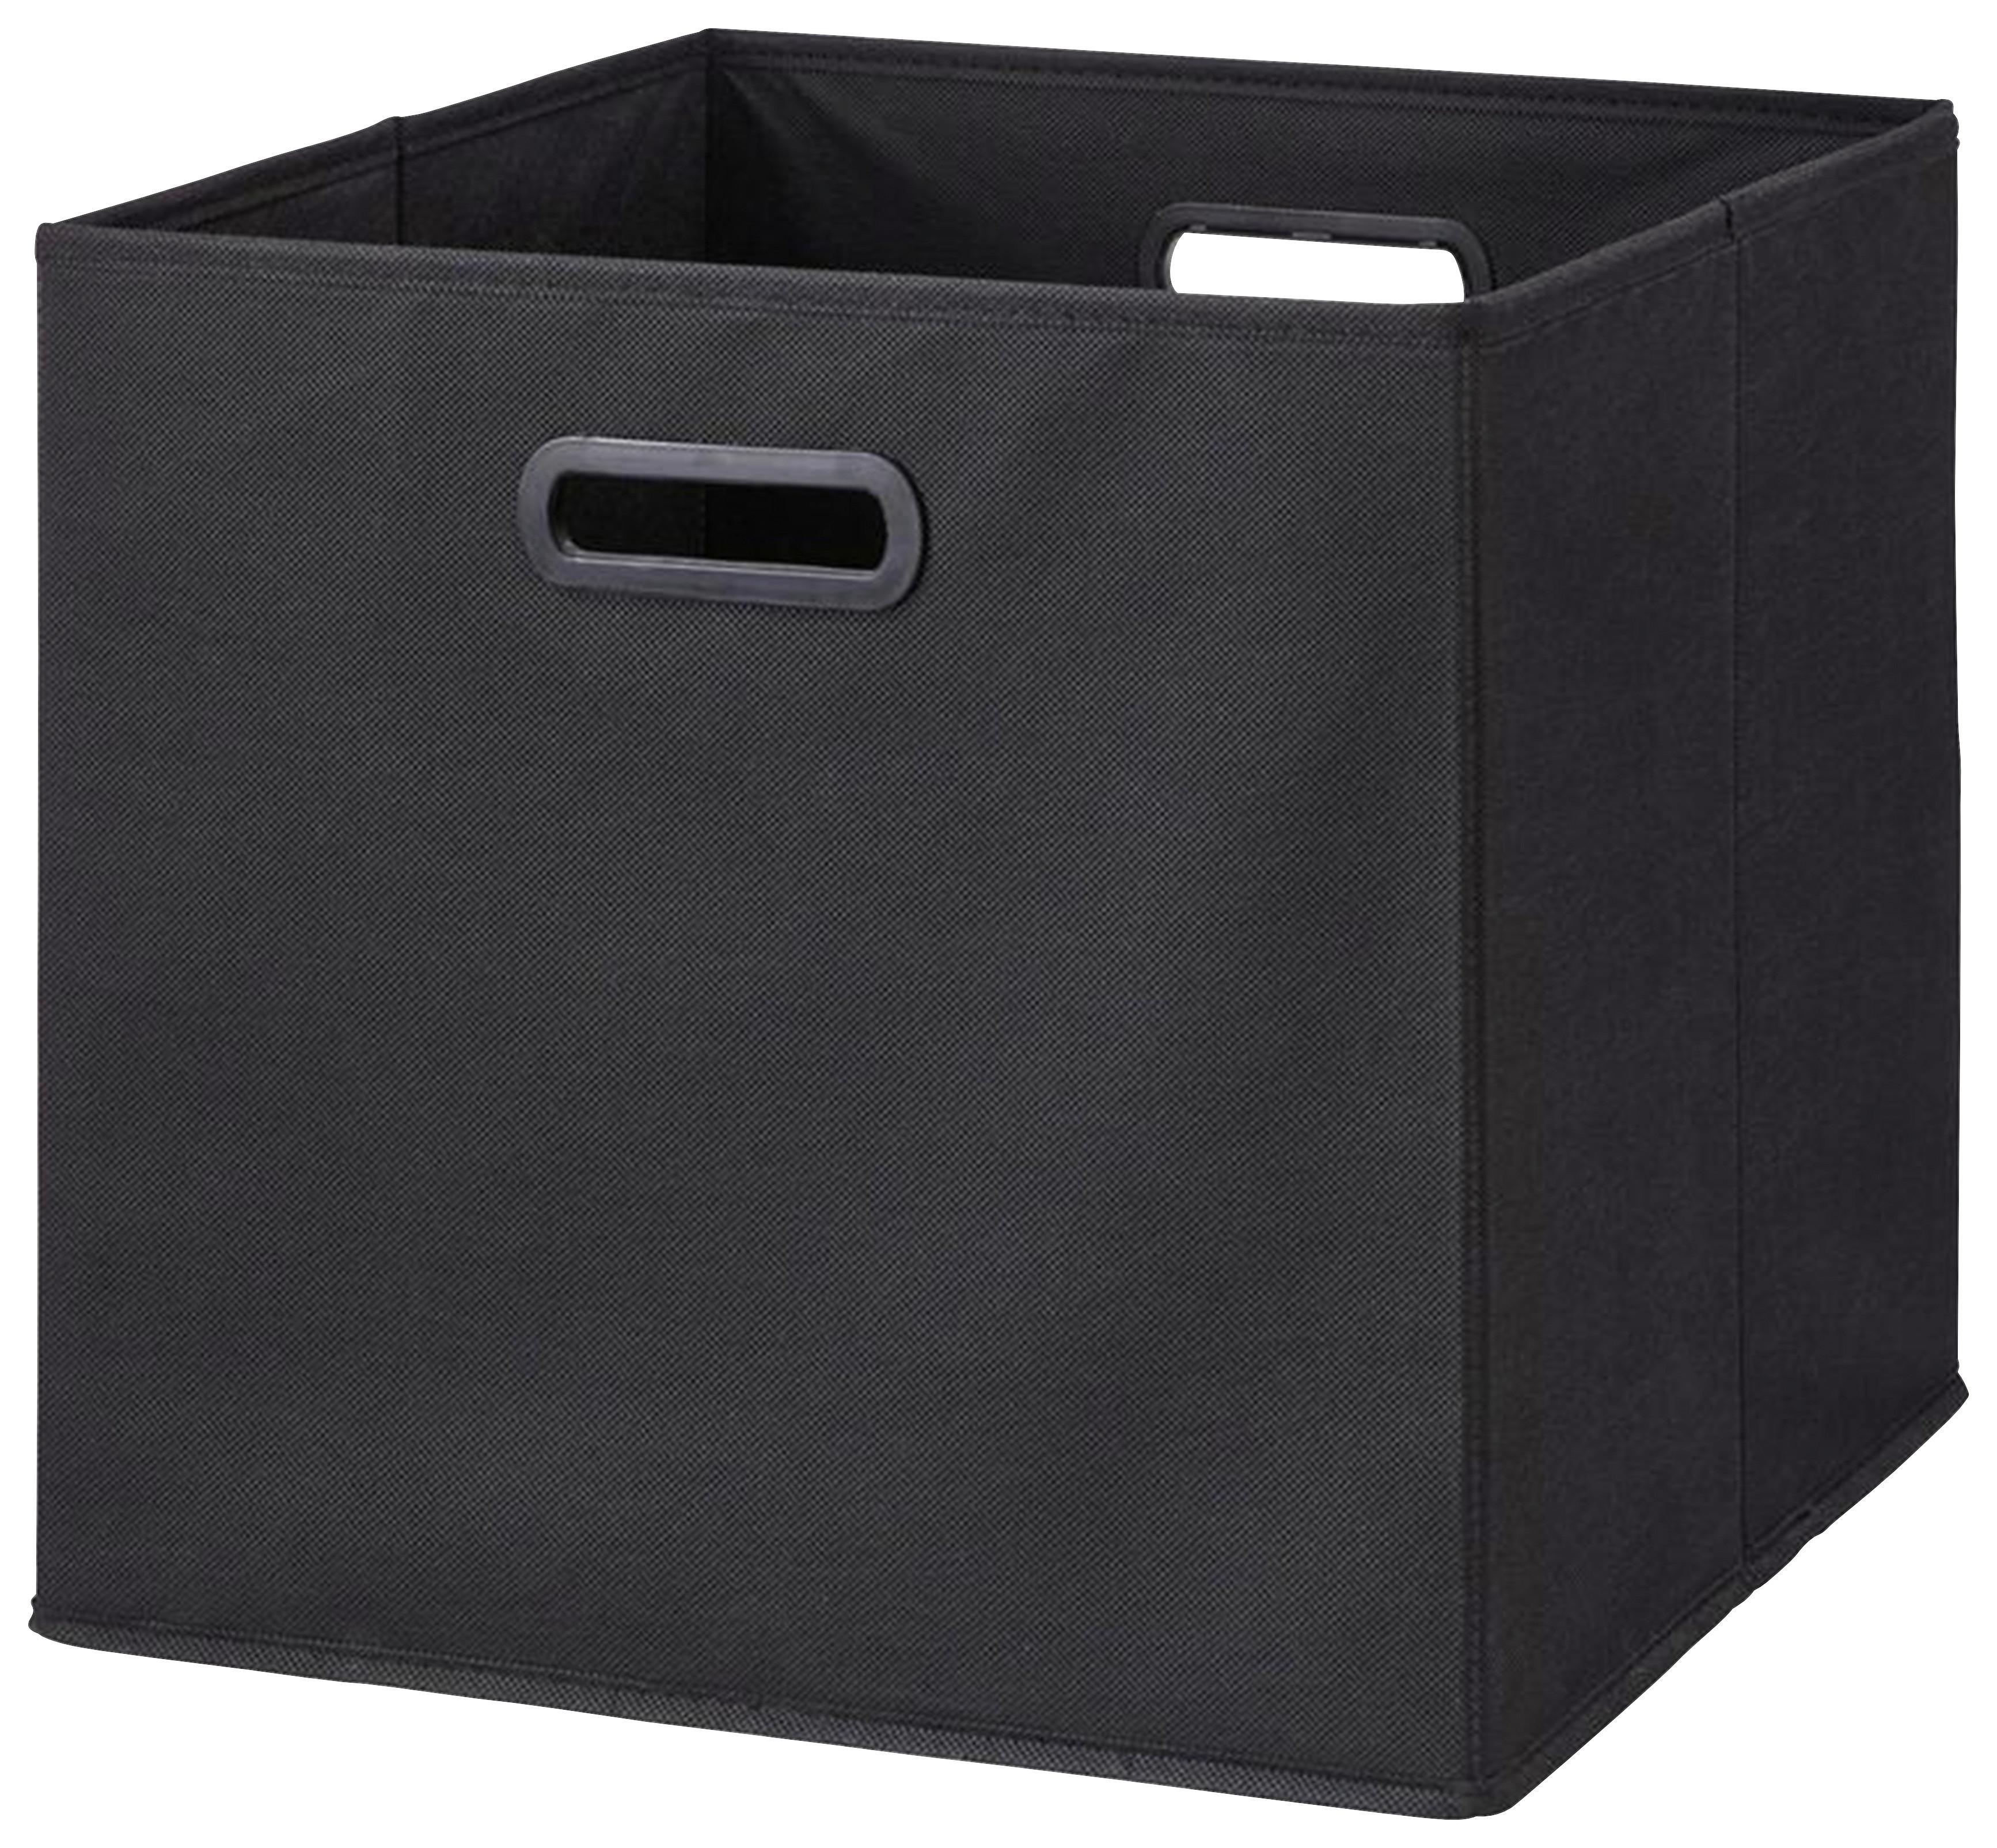 Skládací Krabice Elli, 33/33/32 Cm - černá, Konvenční, karton/textil (33/33/32cm) - Modern Living